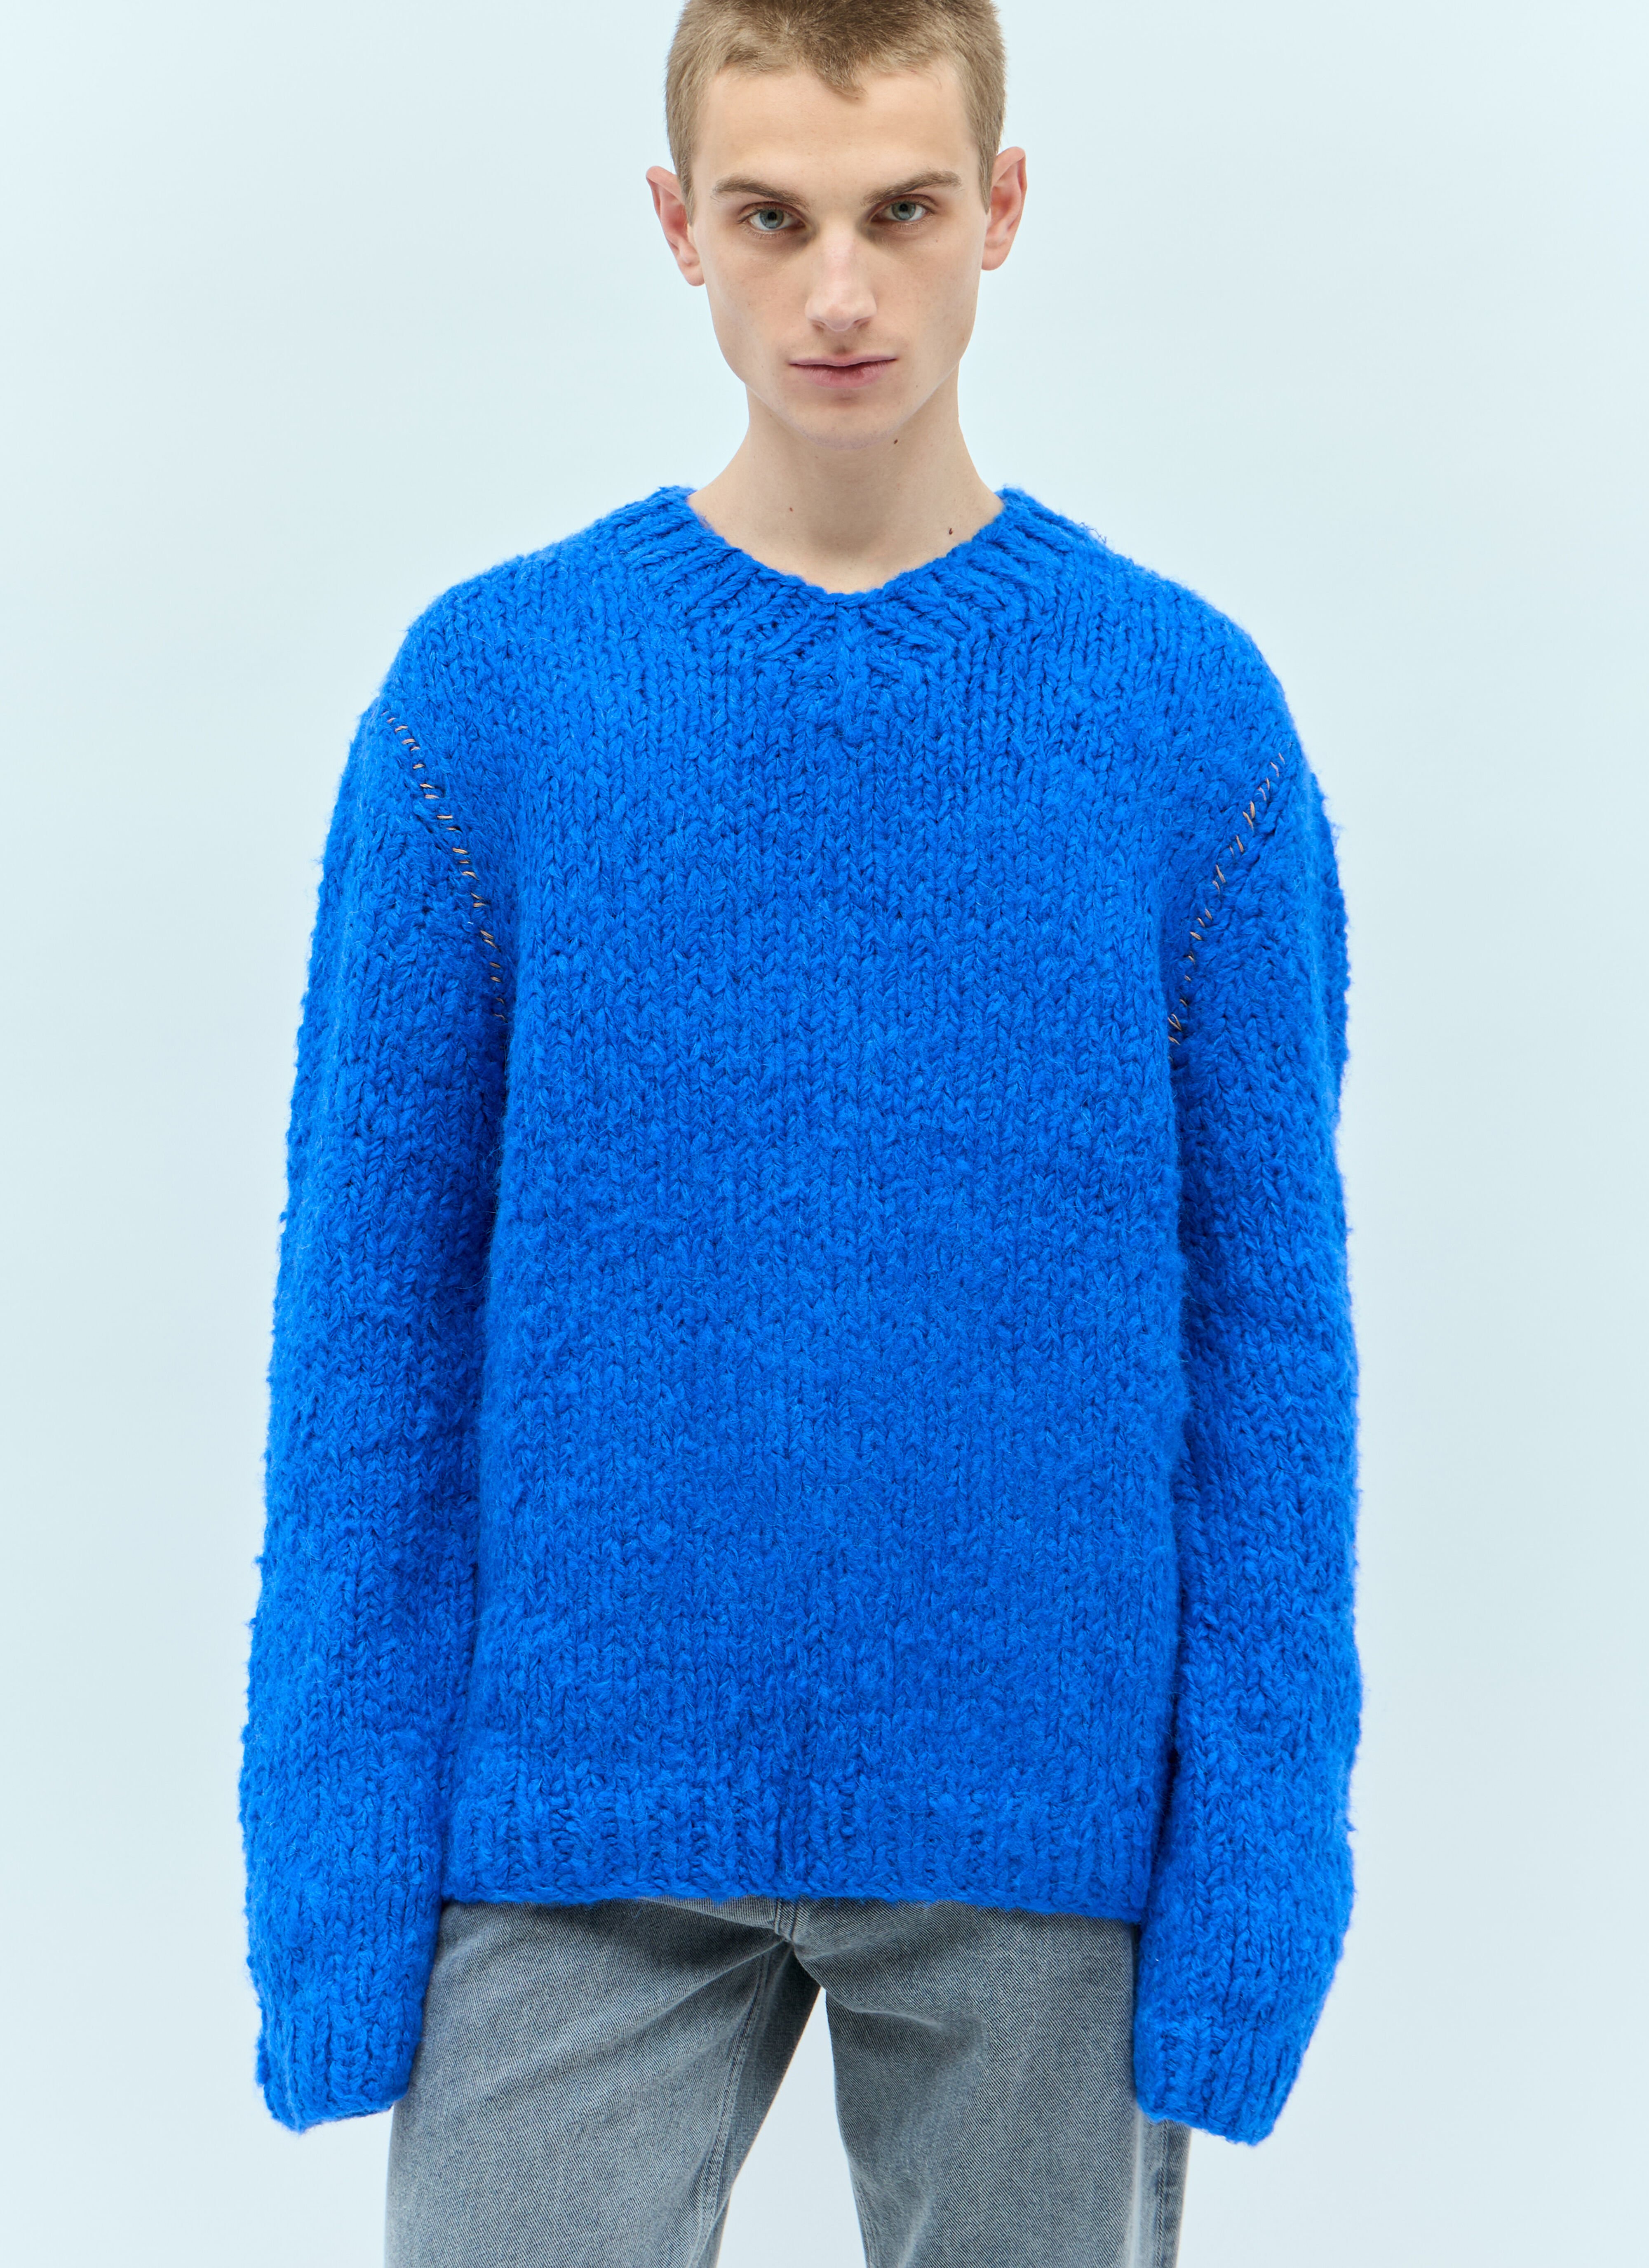 Balmain Knitted Alpaca Mix Sweater Black bln0153010